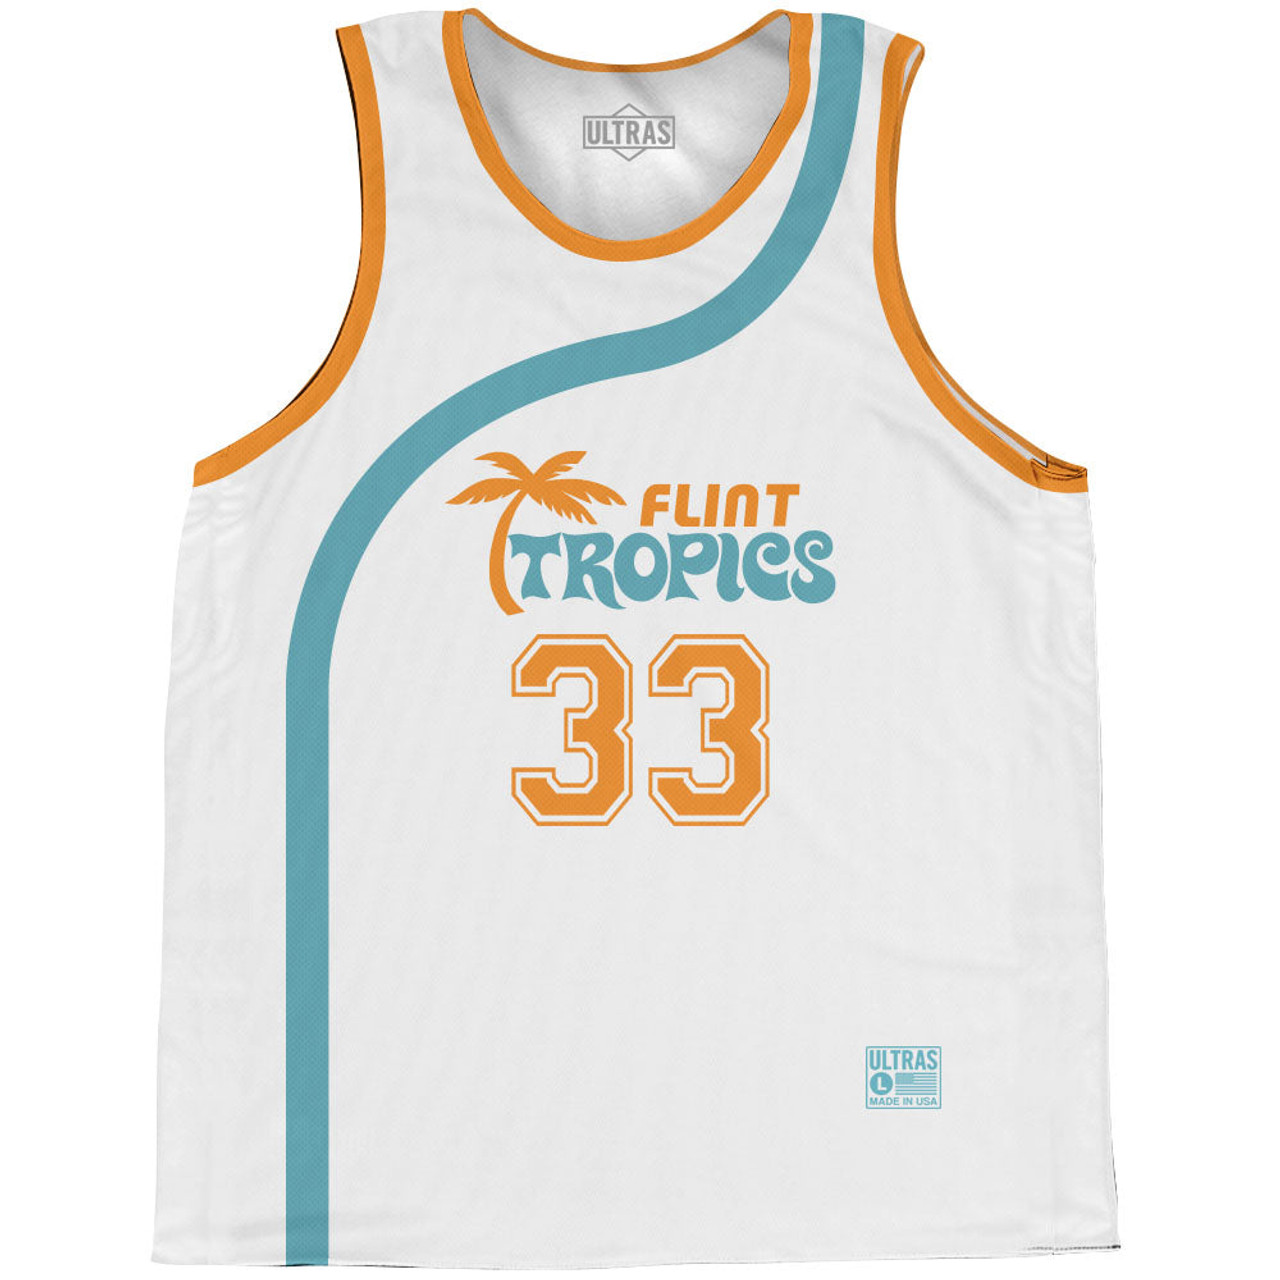 Flint Tropics Moon 33 Basketball Practice Singlet Jersey - White